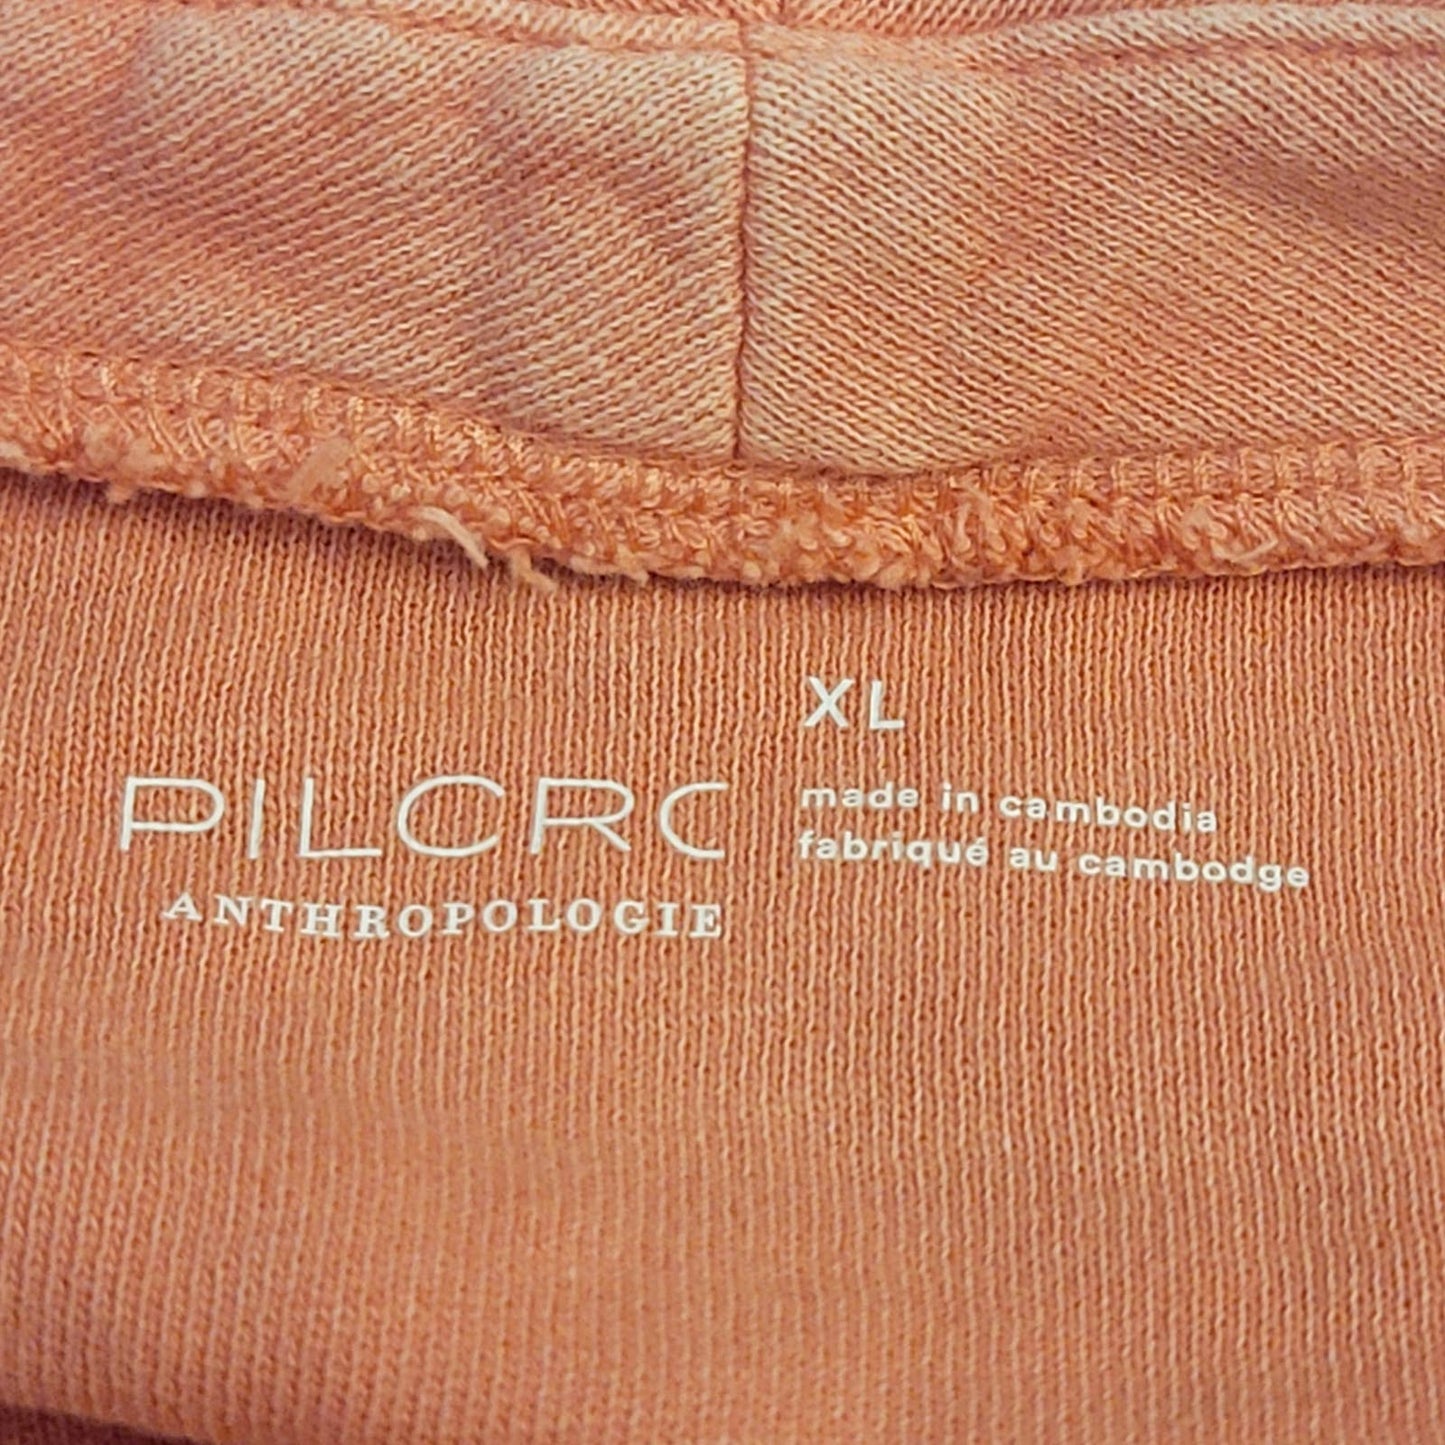 Anthropologie Pilcro Salmon Pink Long Sleeve Sweater Dress